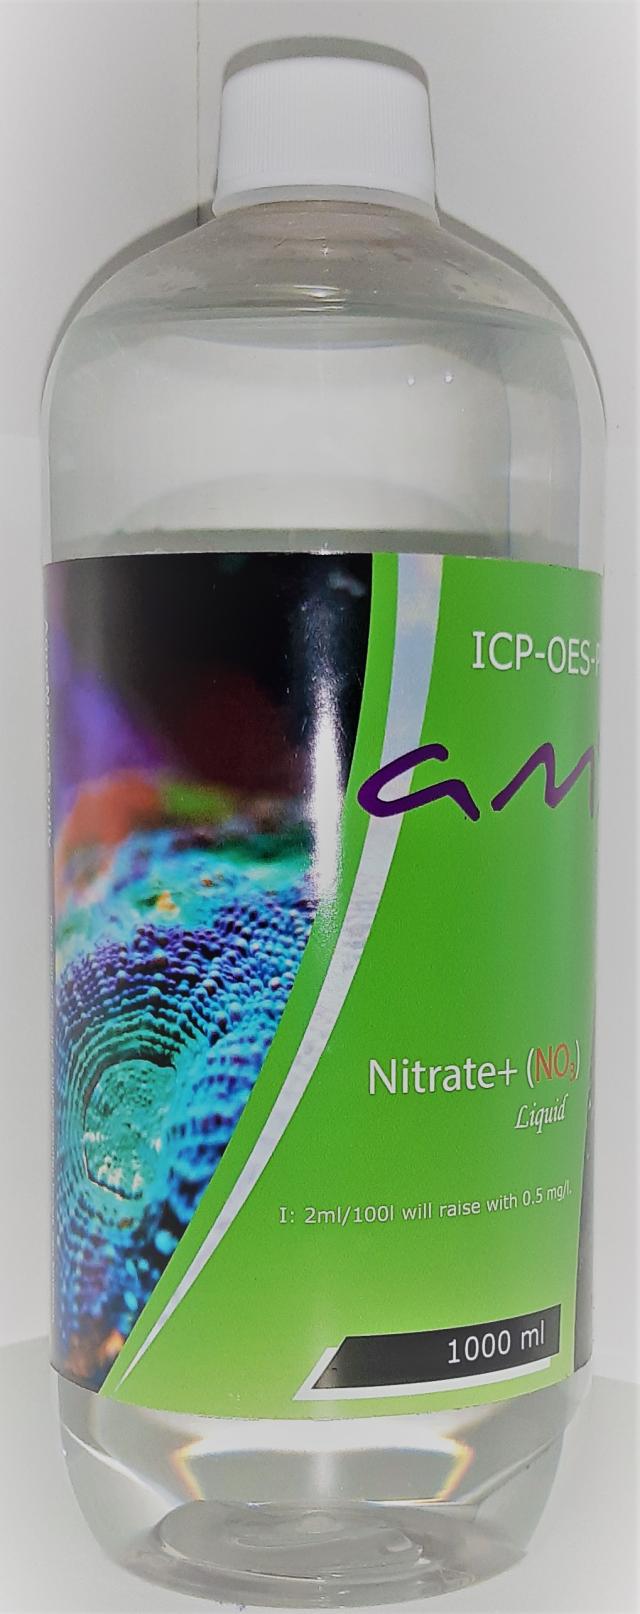 ams nitrate + (NO3) liquid 1000ml